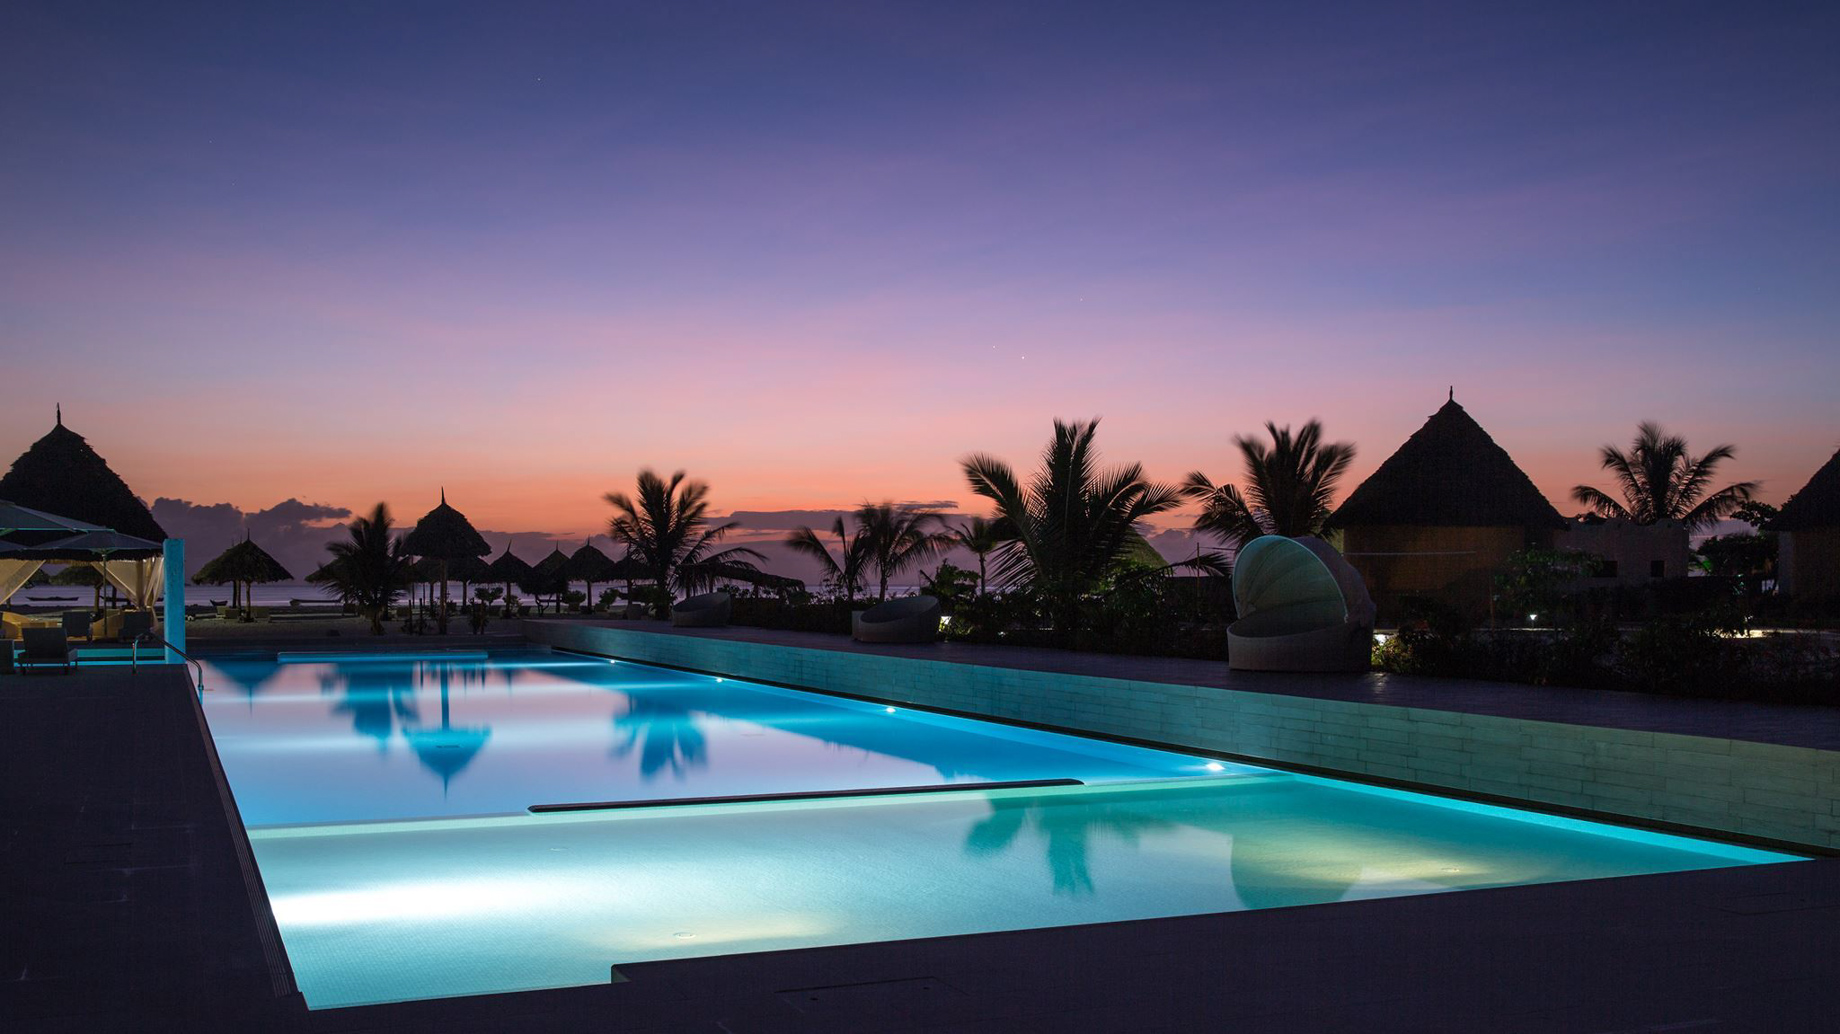 Gold Zanzibar Beach House & Spa Resort – Nungwi, Zanzibar, Tanzania – Resort Pool Night View